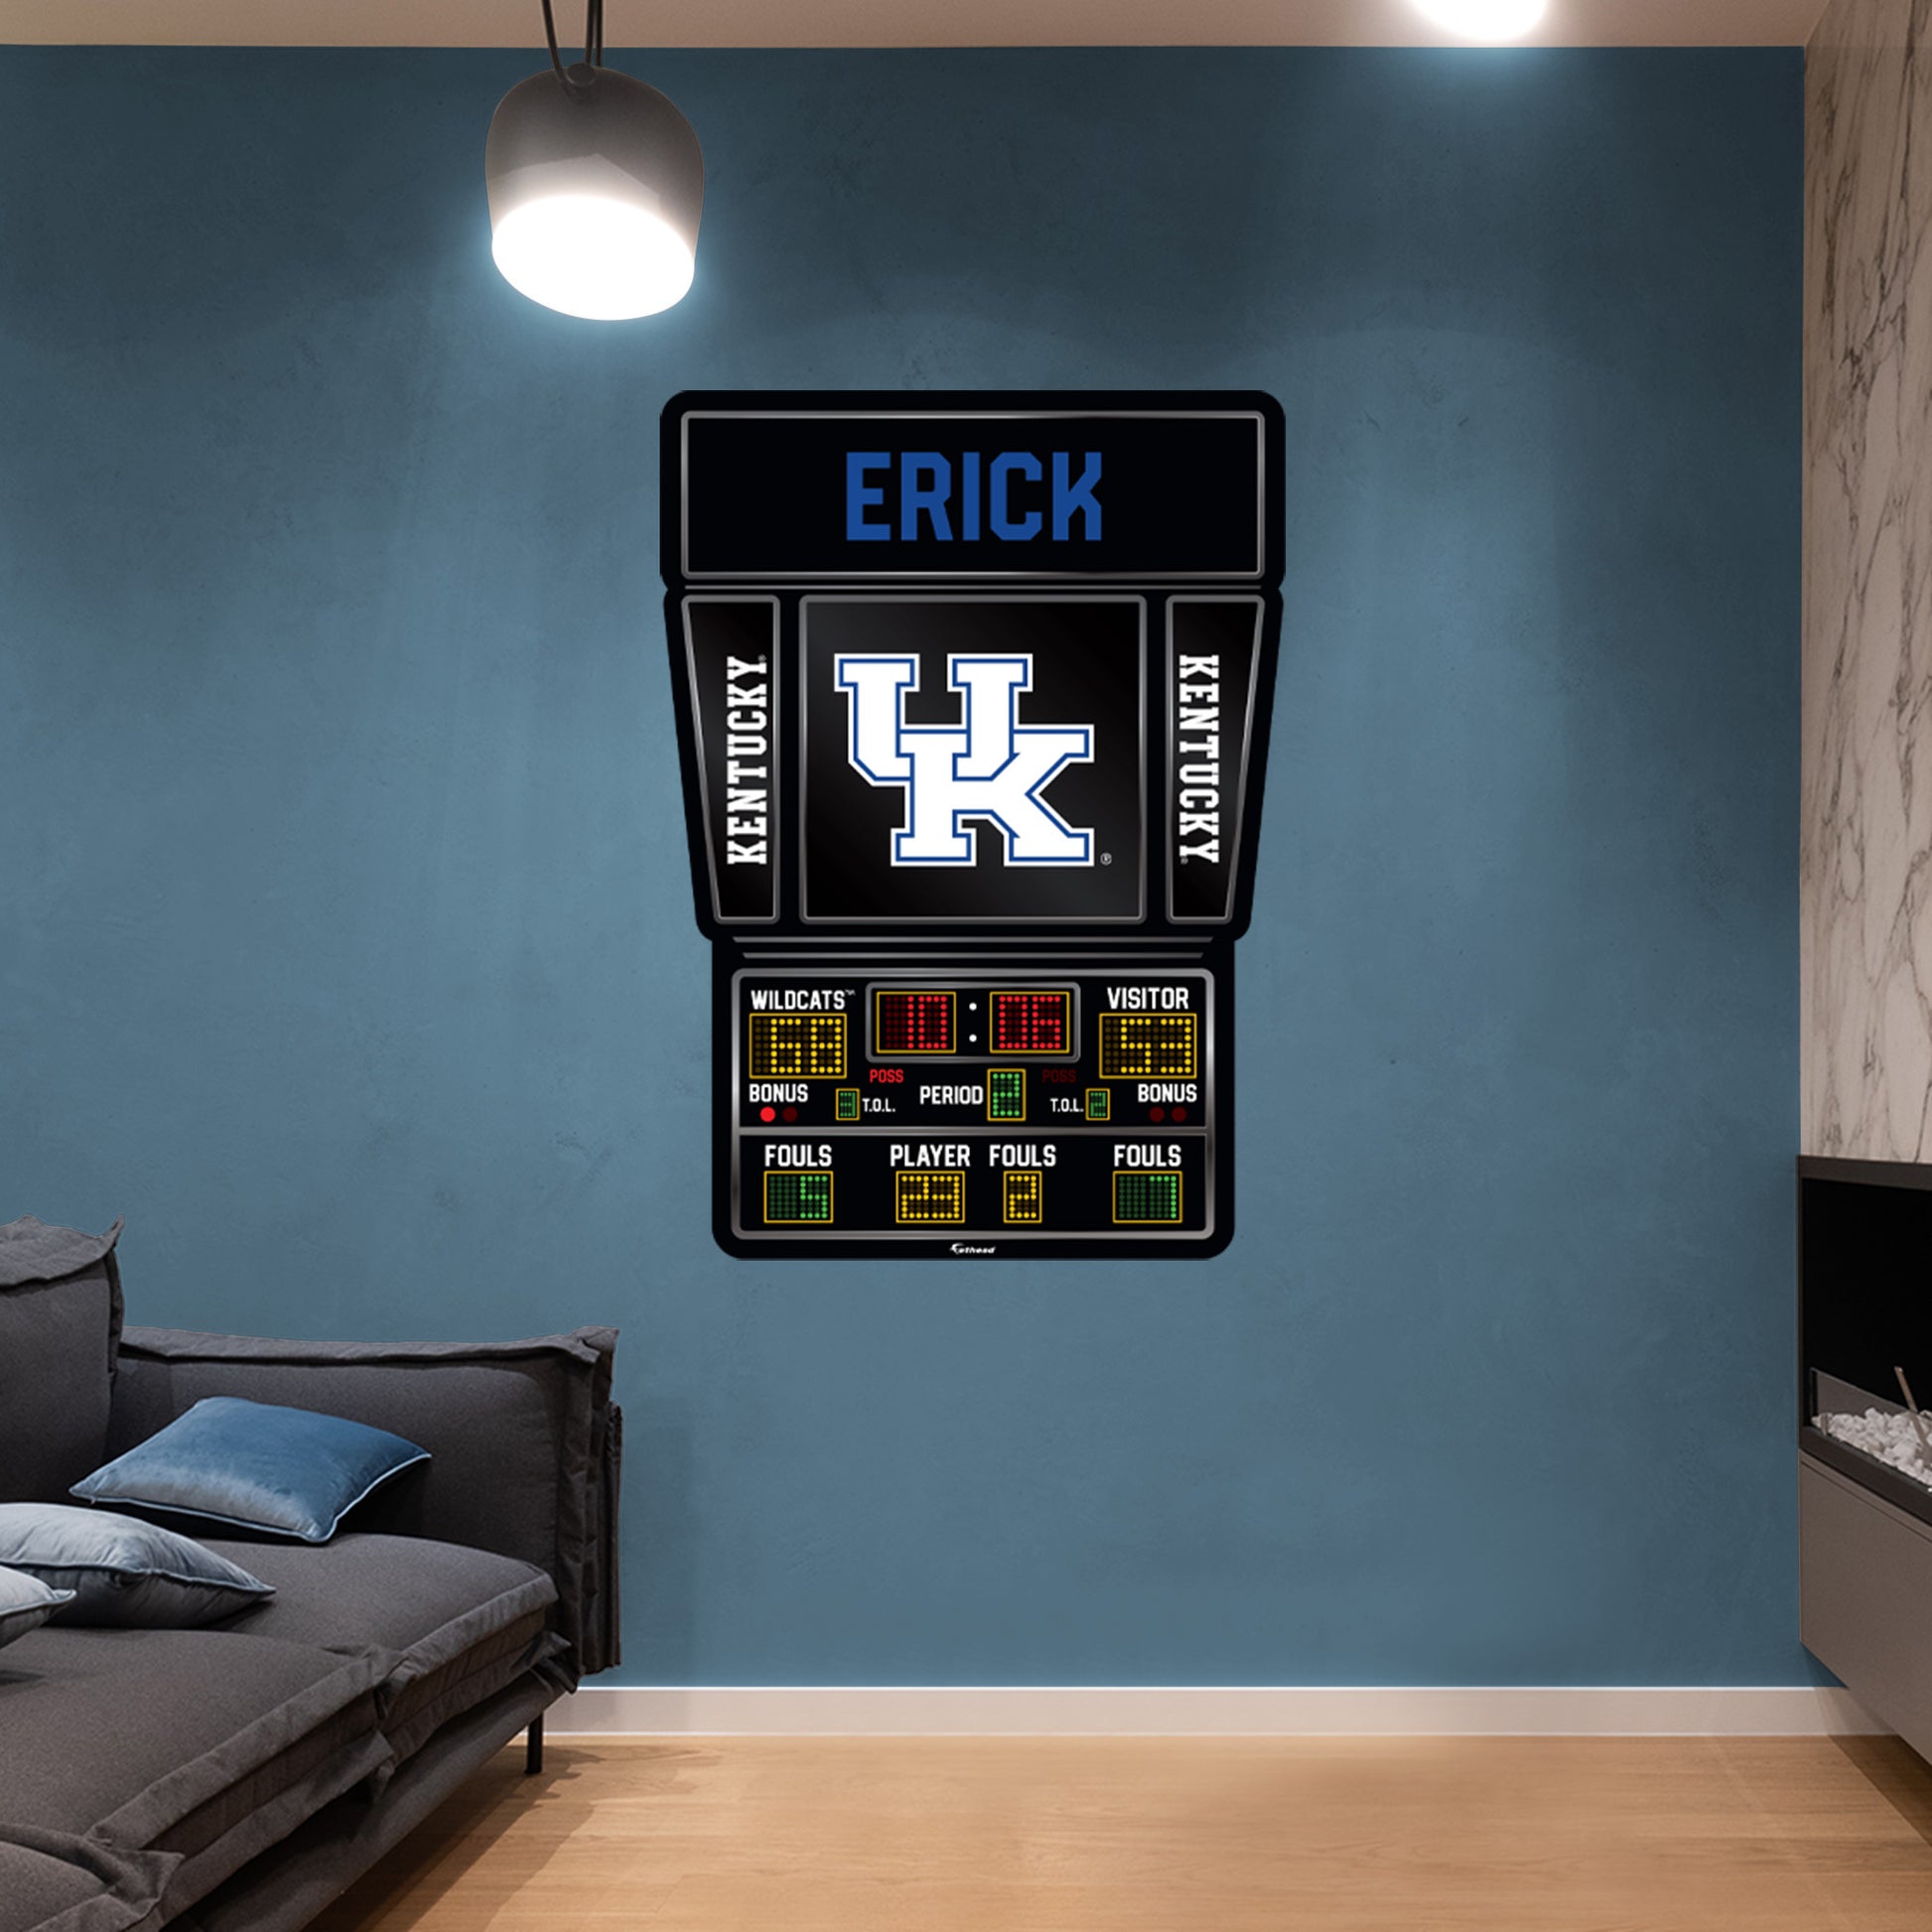 Kentucky Wildcats Customizable College Style Basketball Jersey